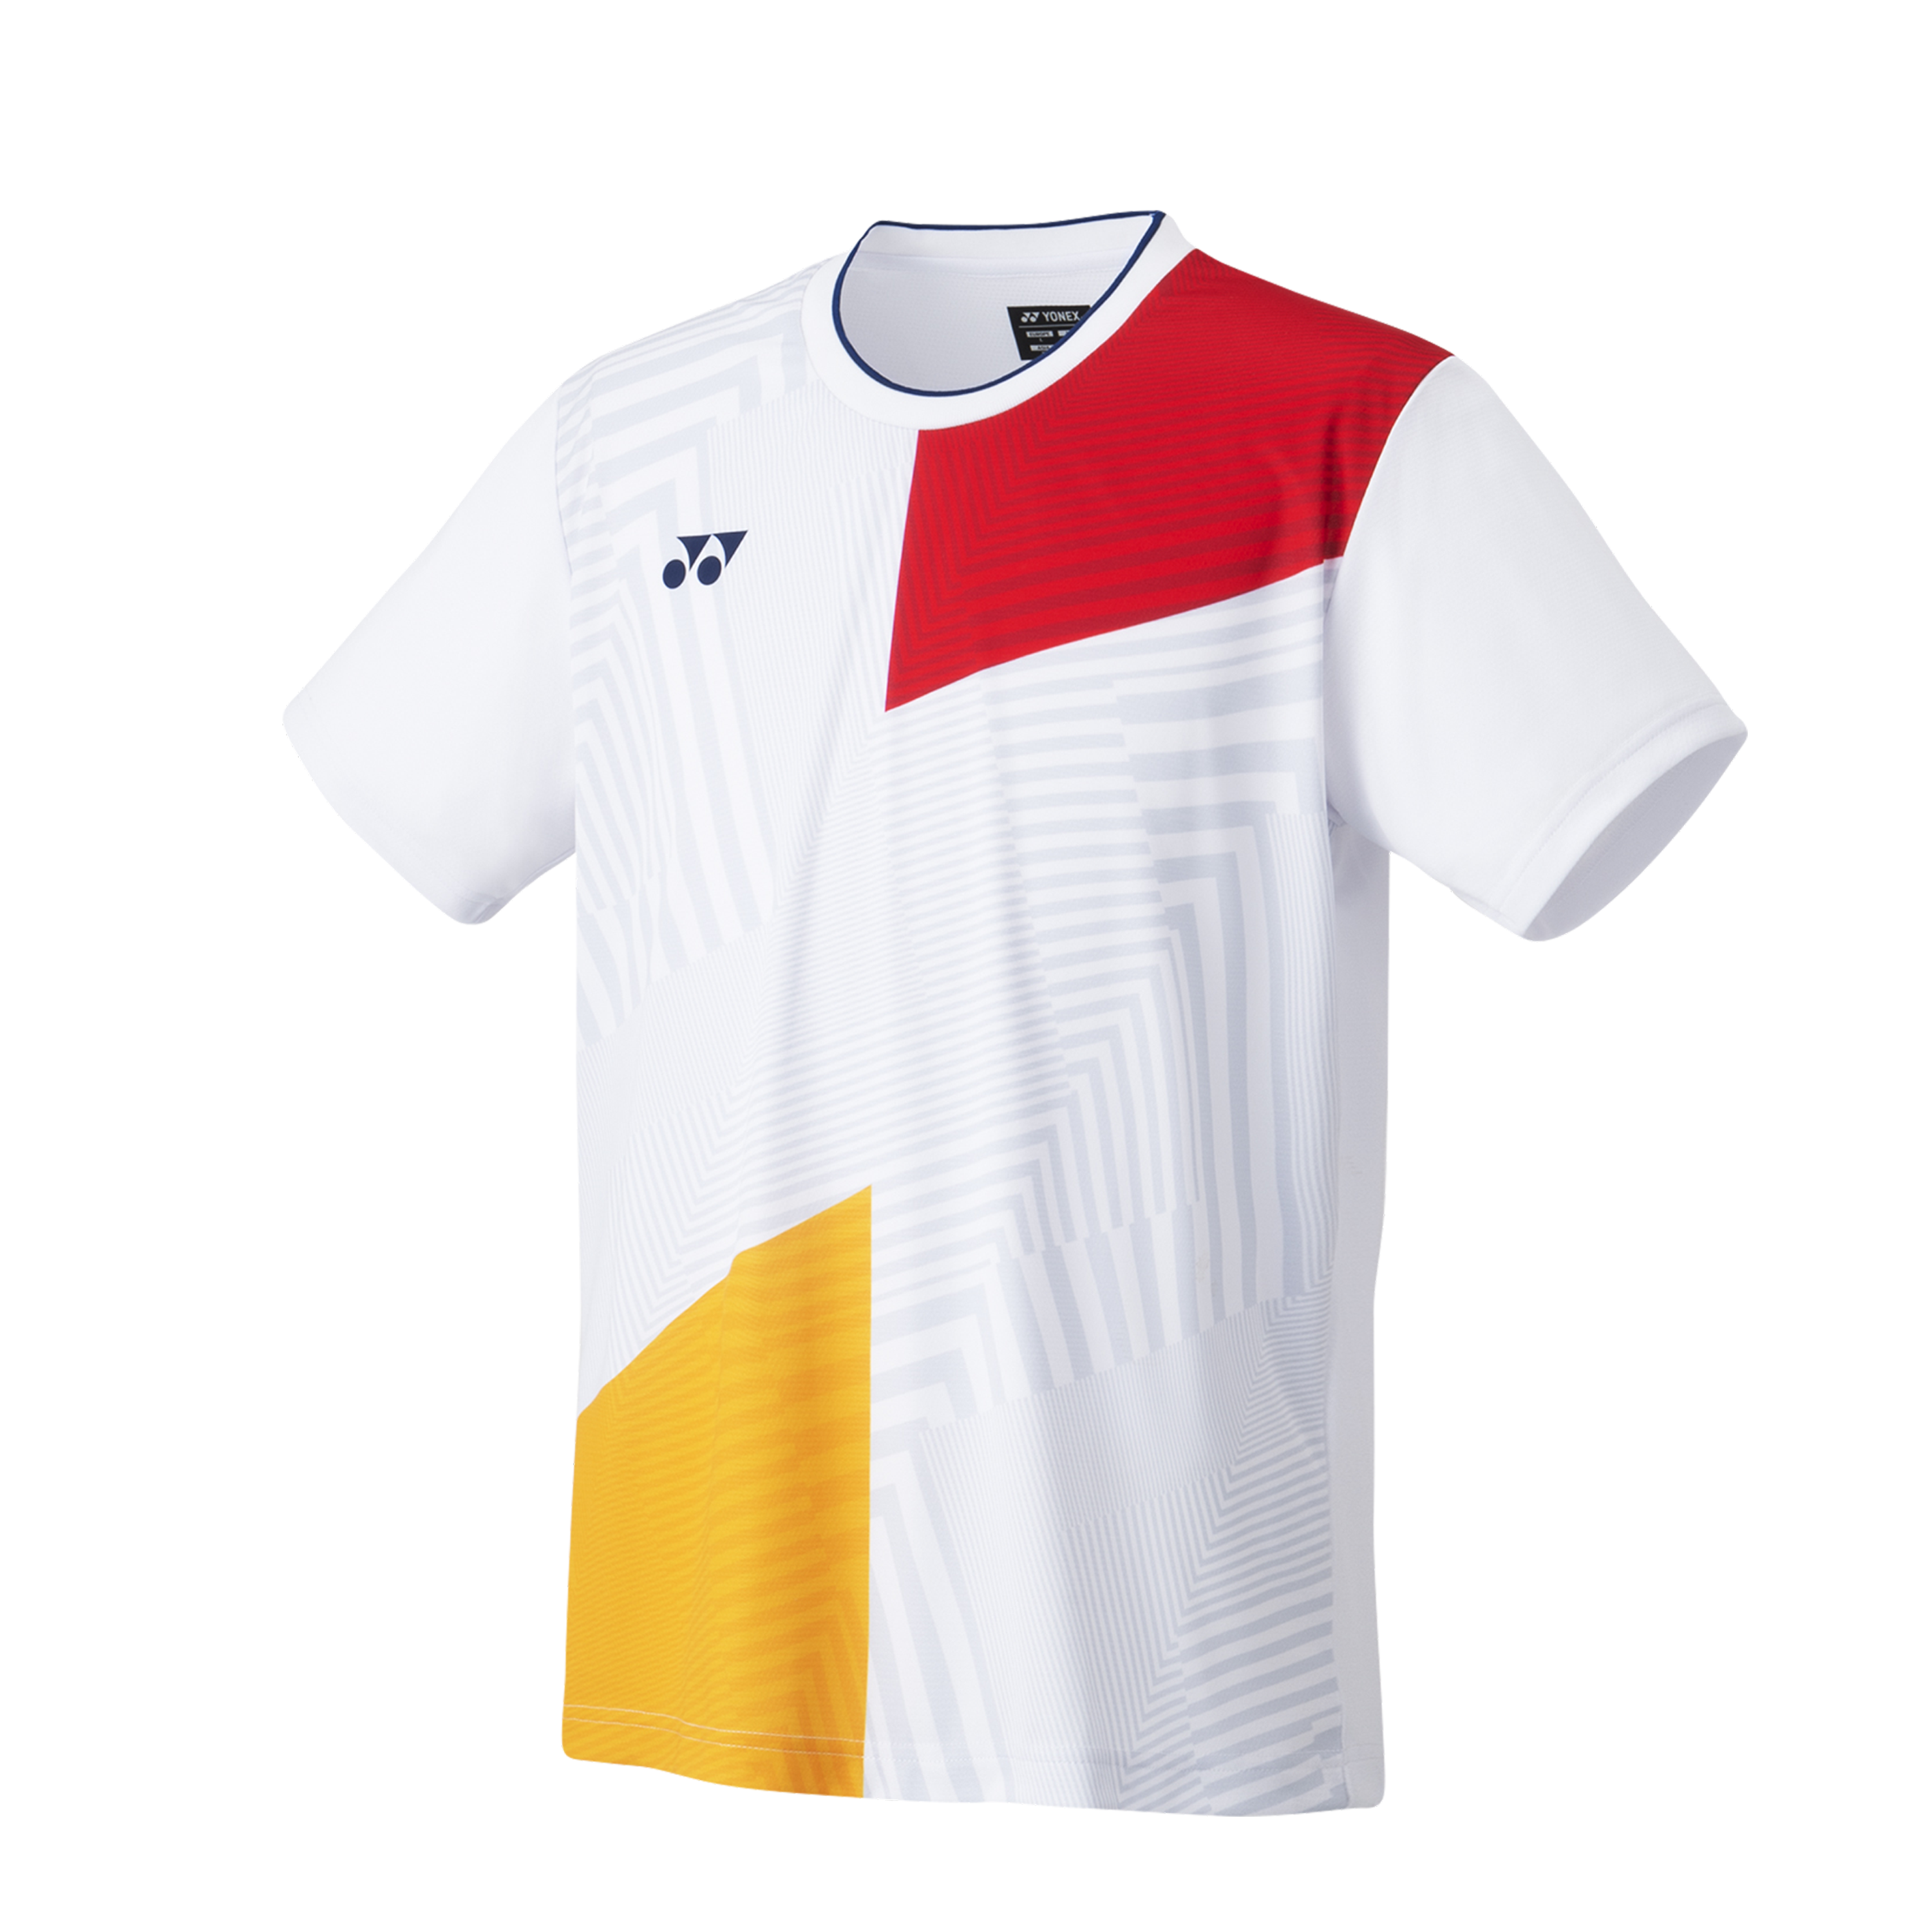 Yonex Premium Badminton/ Sports Shirt 10517 White UNISEX